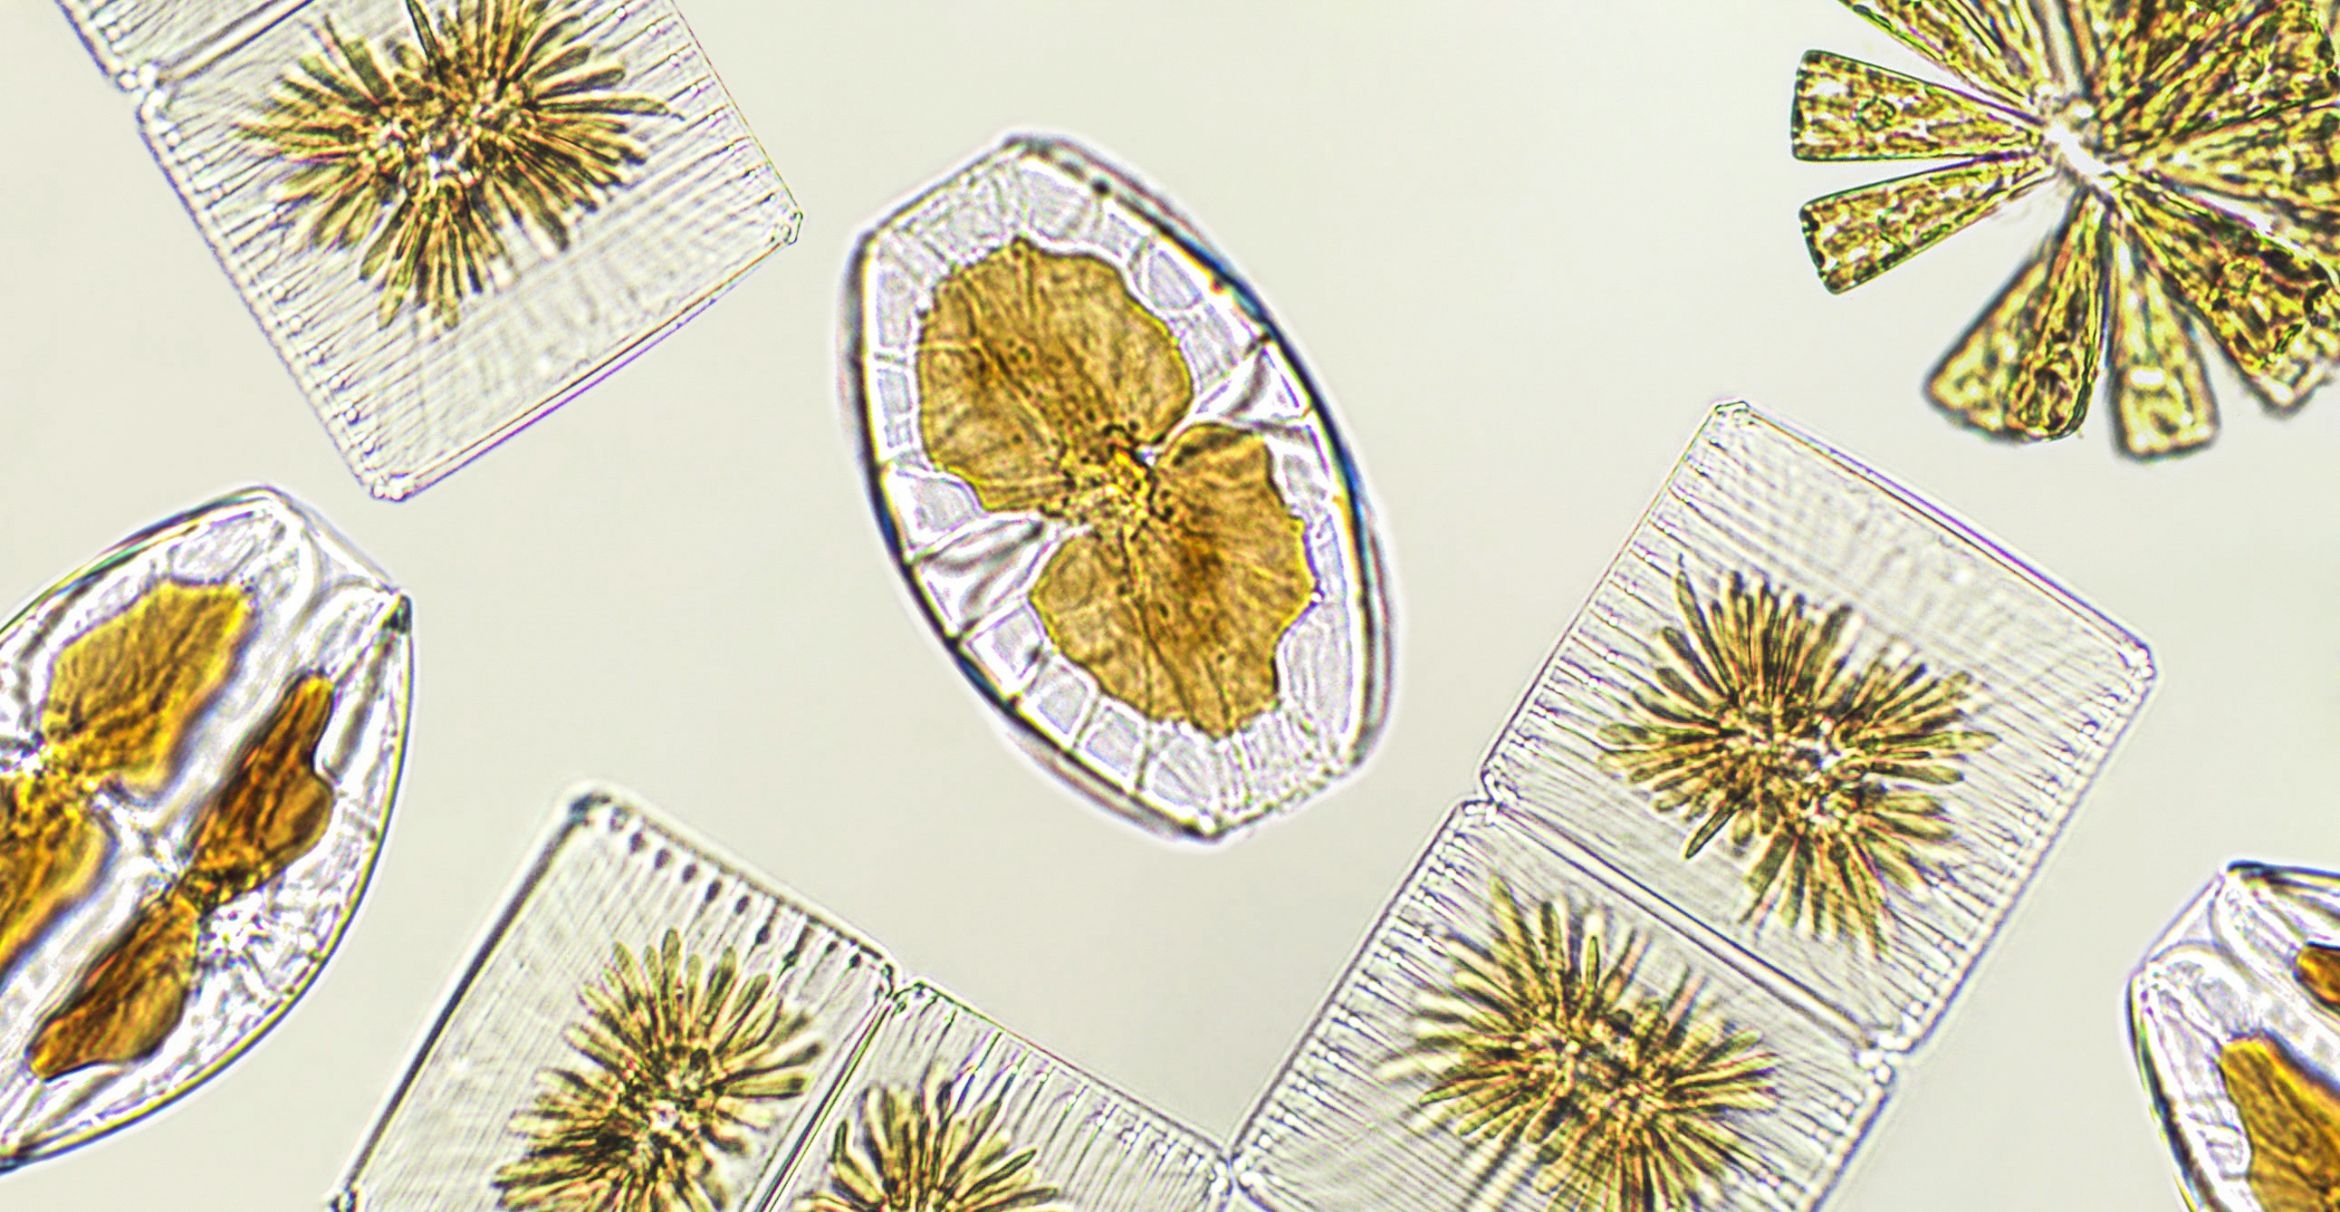 Diatoms under the microscope.